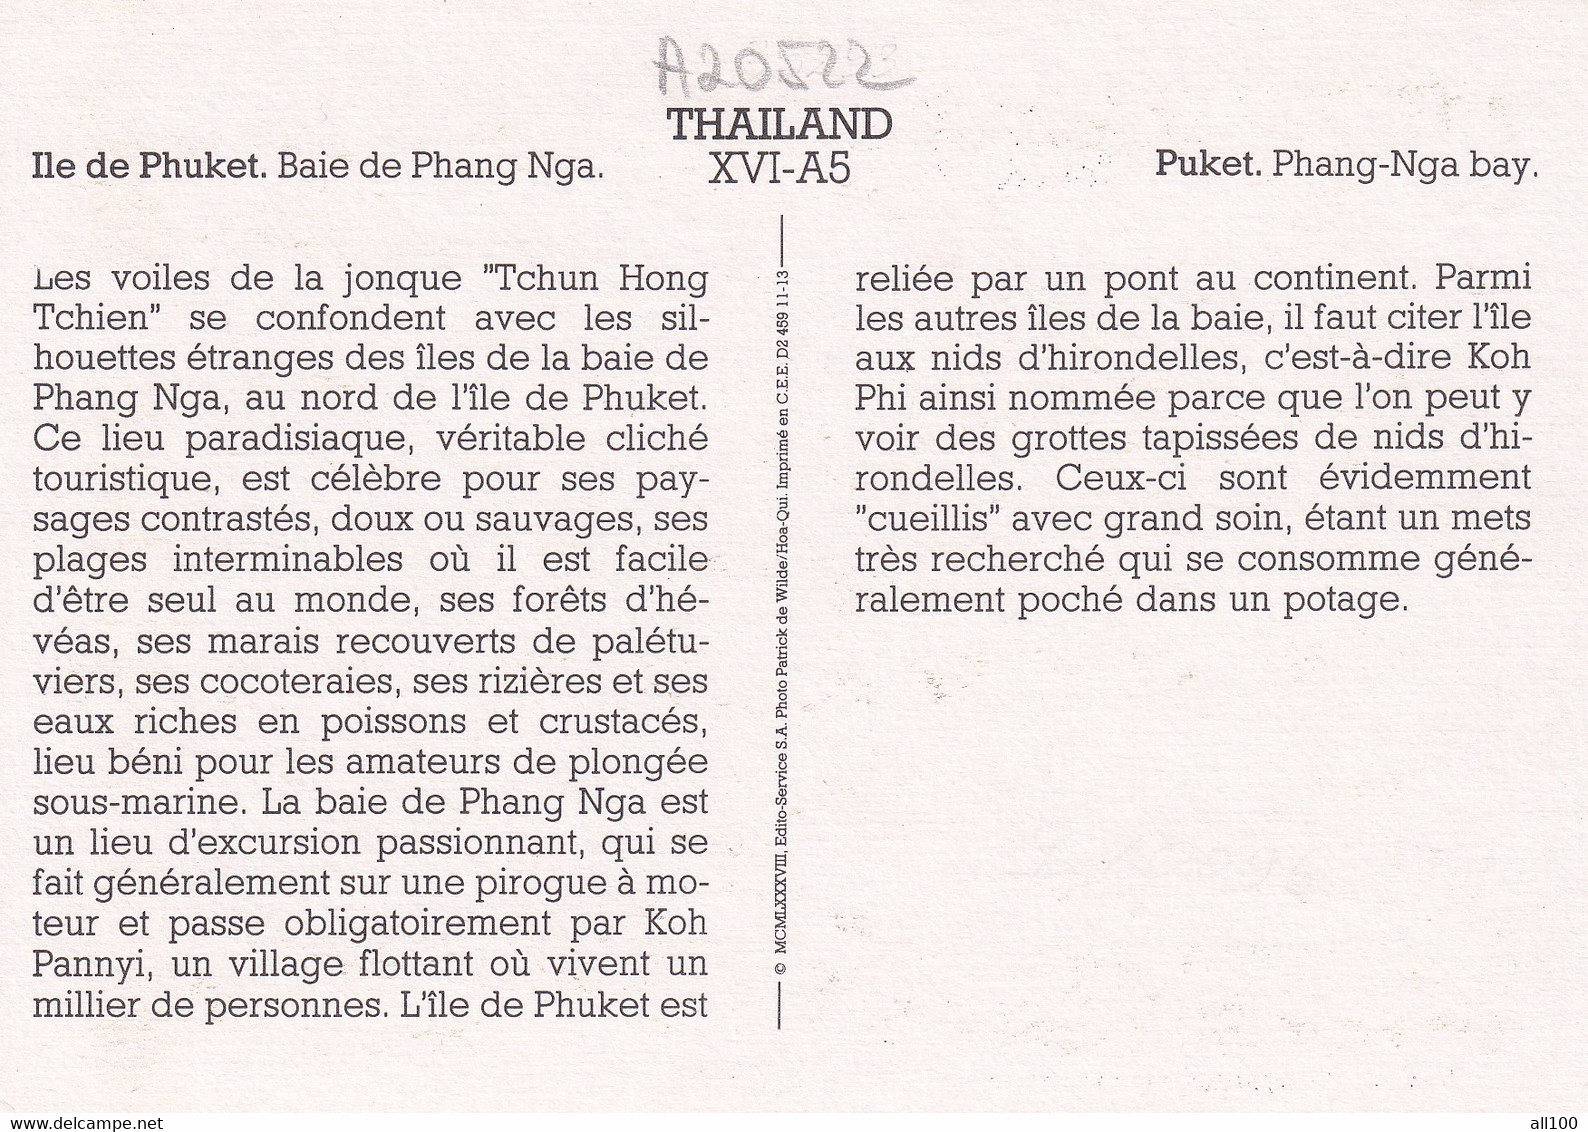 A20522 - PUKET PHANG NGA BAY BAIE DE PHANG NGA ILE DE PHUKET THAILANDE THAILAND BOAT - Thaïlande